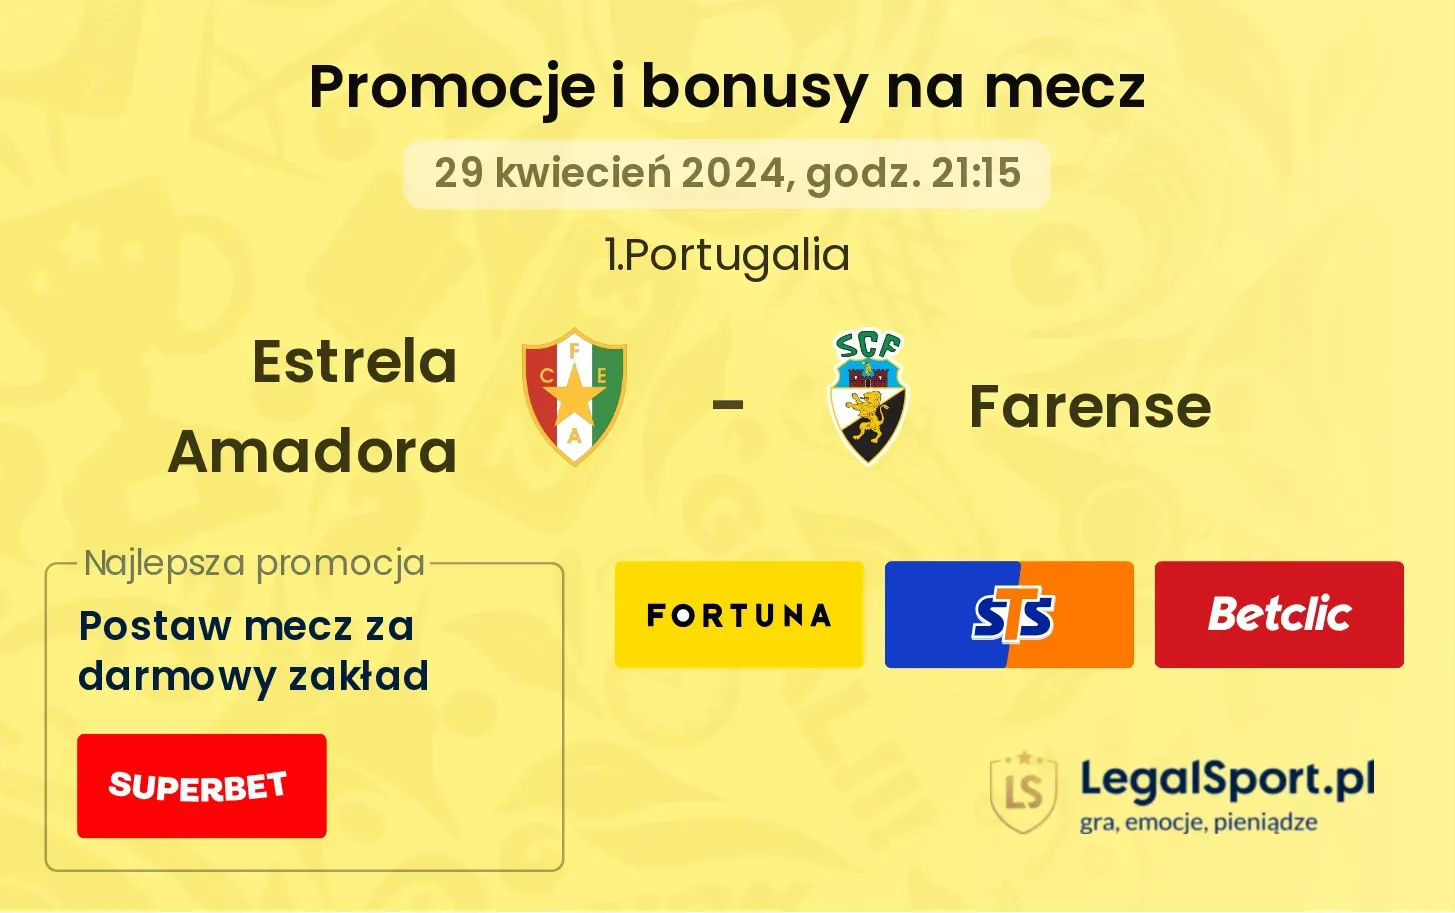 Estrela Amadora - Farense promocje bonusy na mecz